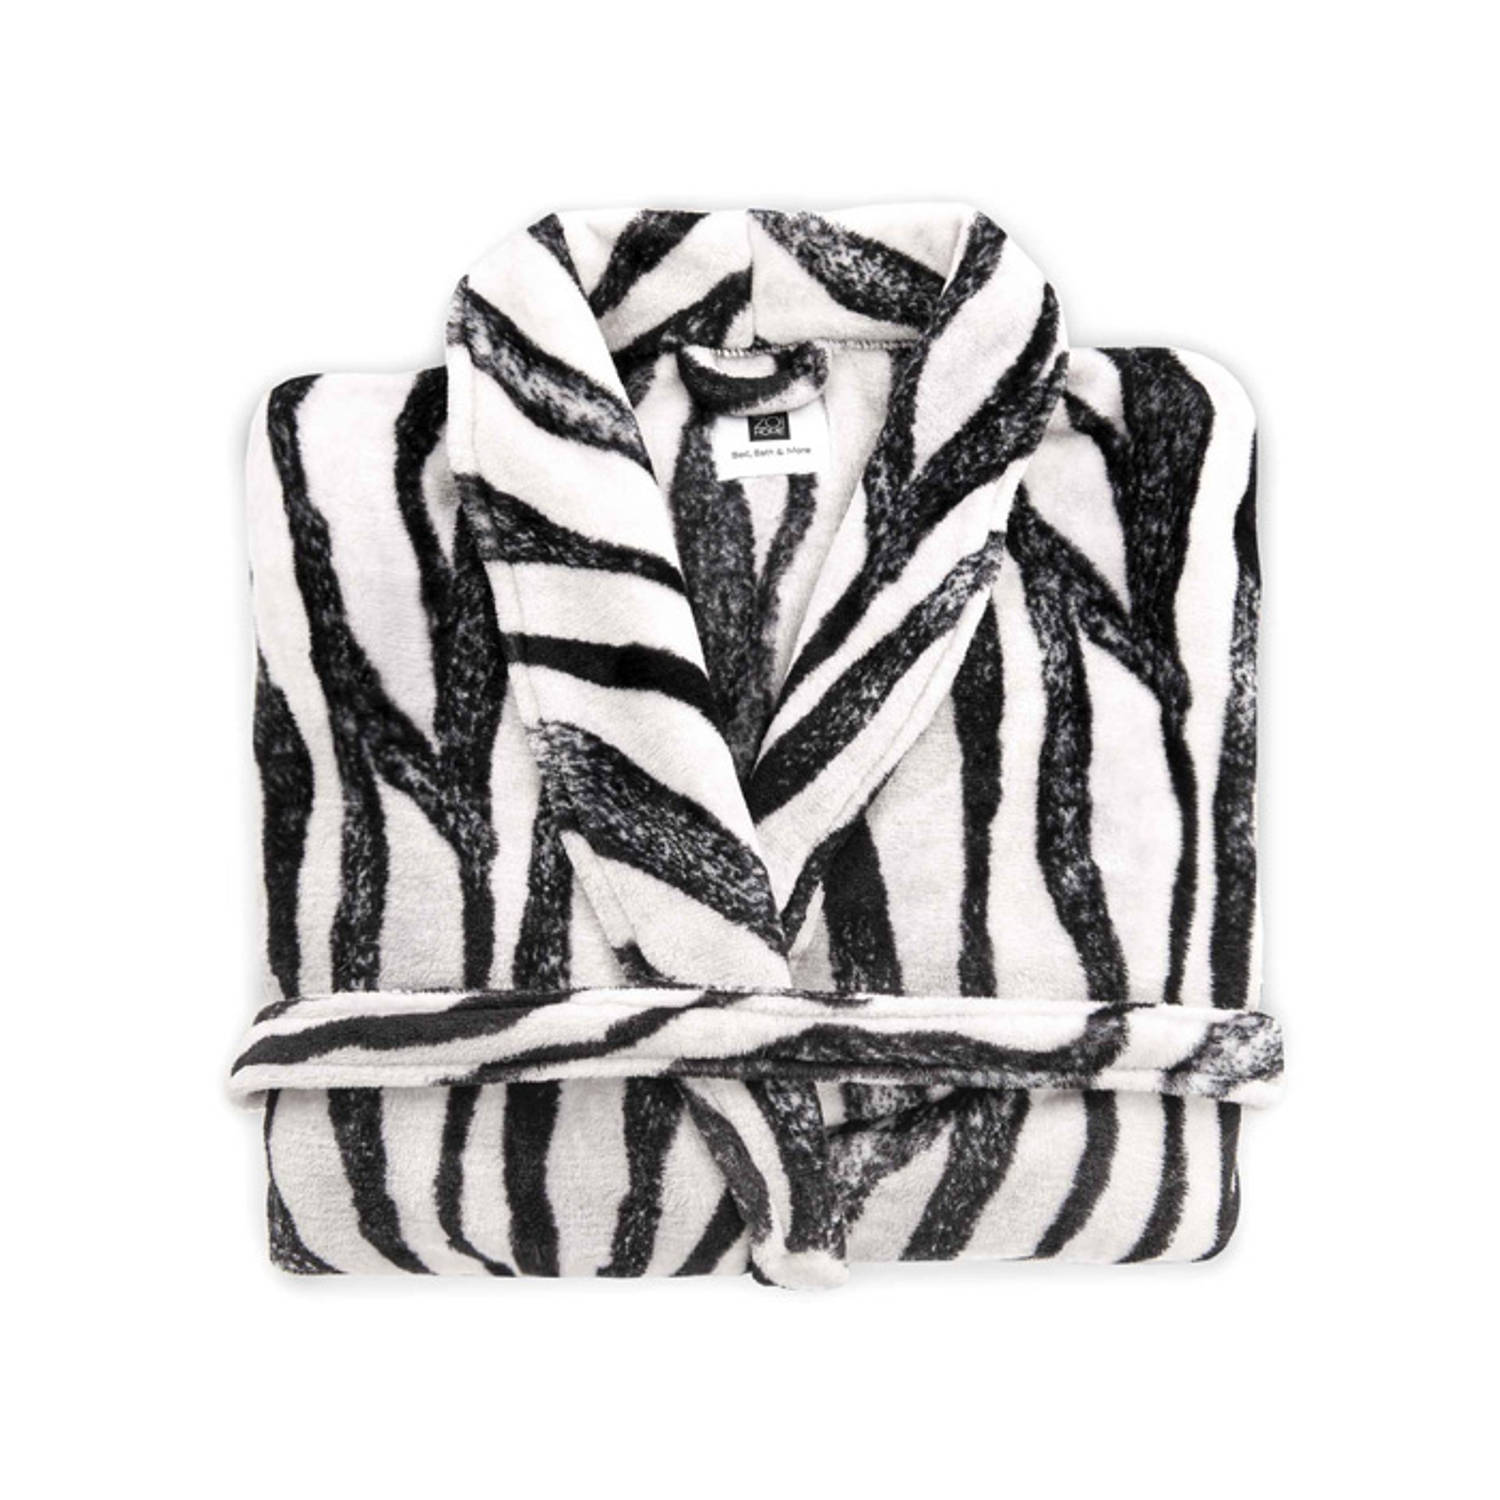 Dek de tafel lettergreep Reinig de vloer Zo! Home Badjas Zebra - Zwart/Wit - S | Blokker